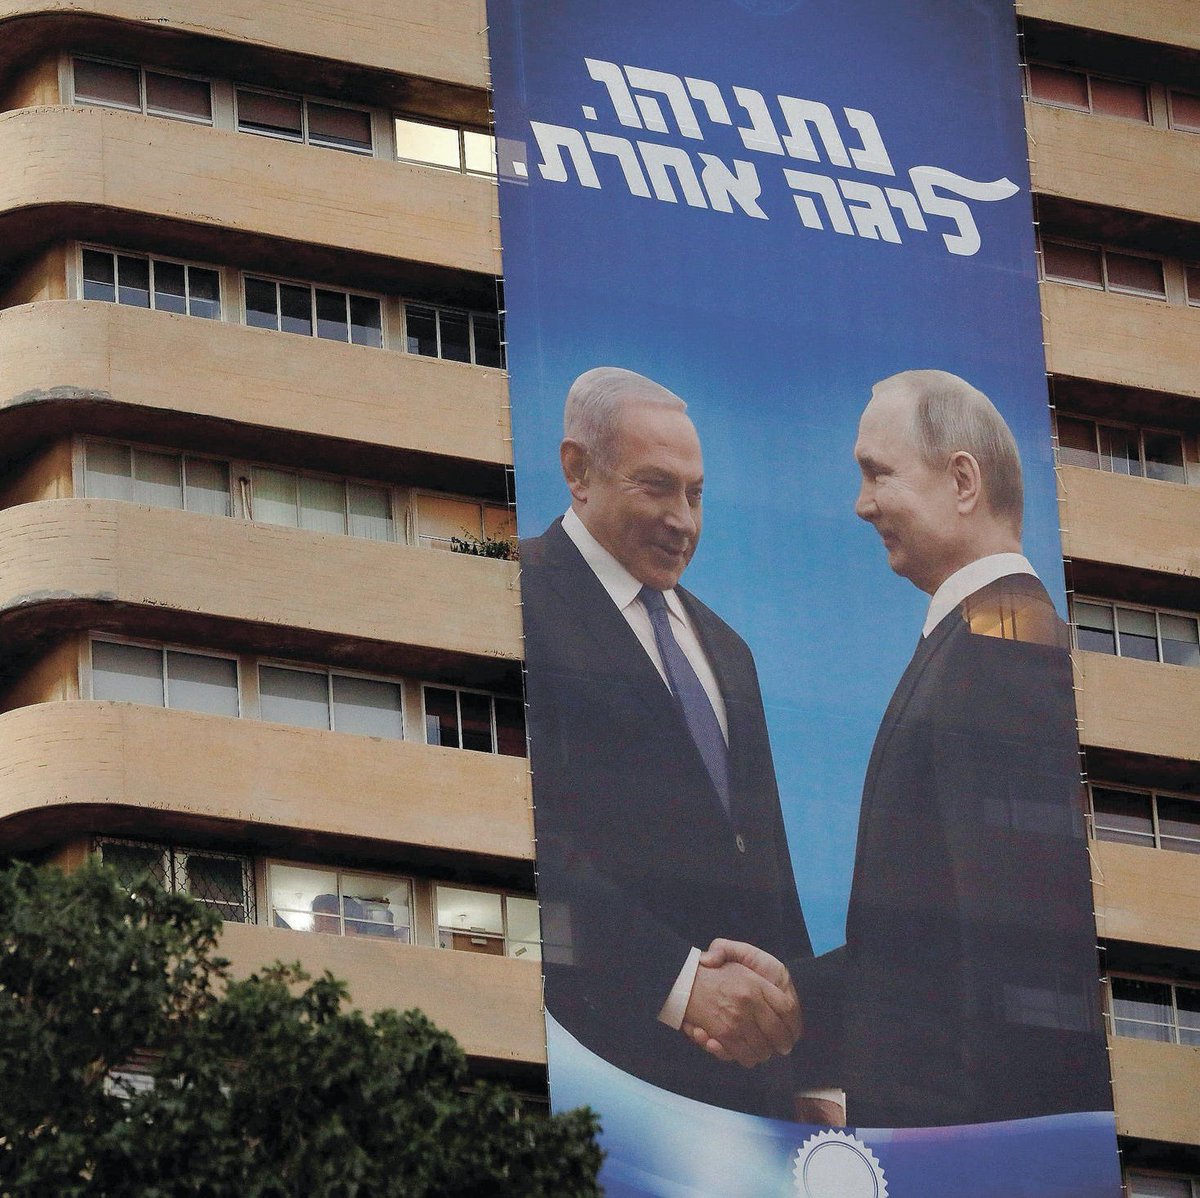 @BaddCompani I remember Netanyahu's election ads: